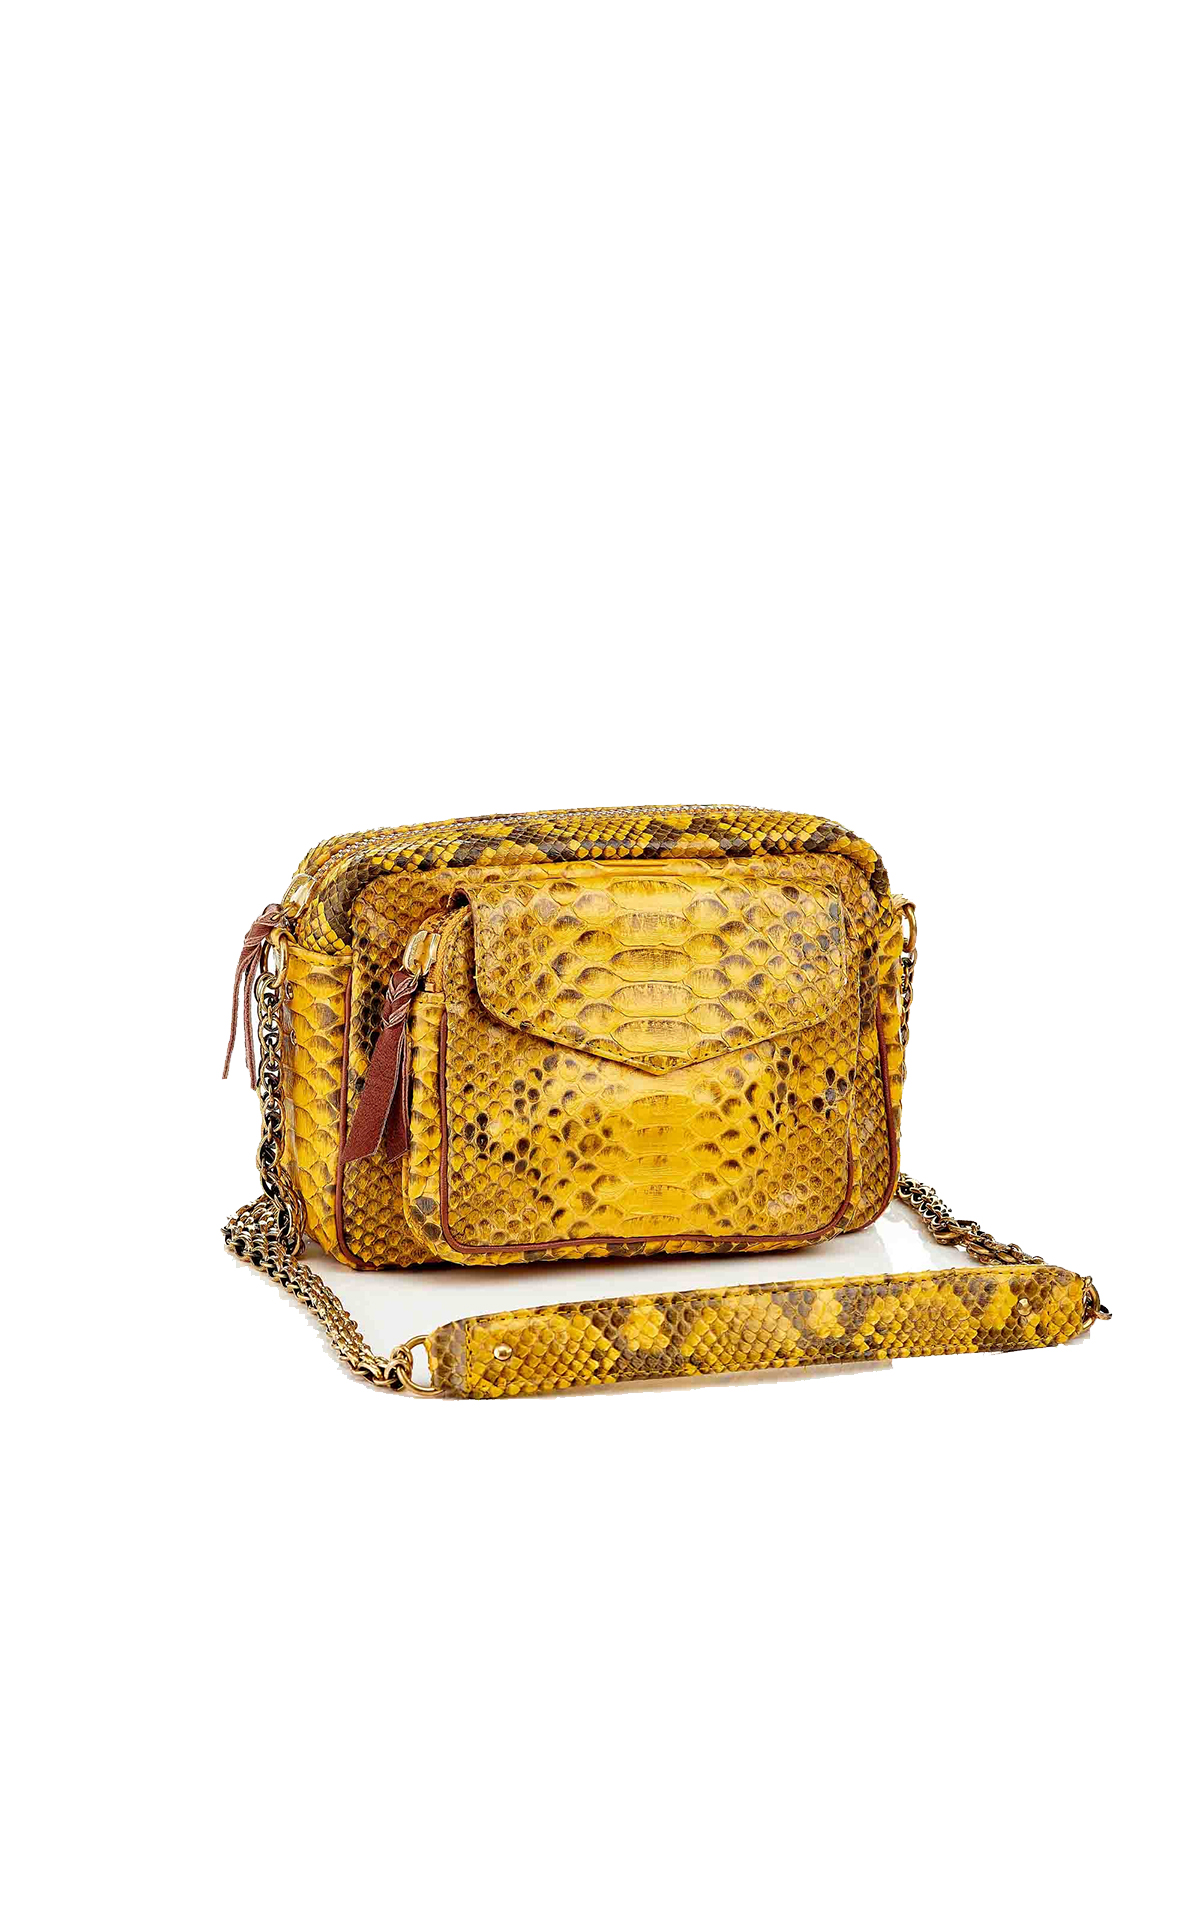 Claris Virot Charly yellow python bag with chain La Vallée Village